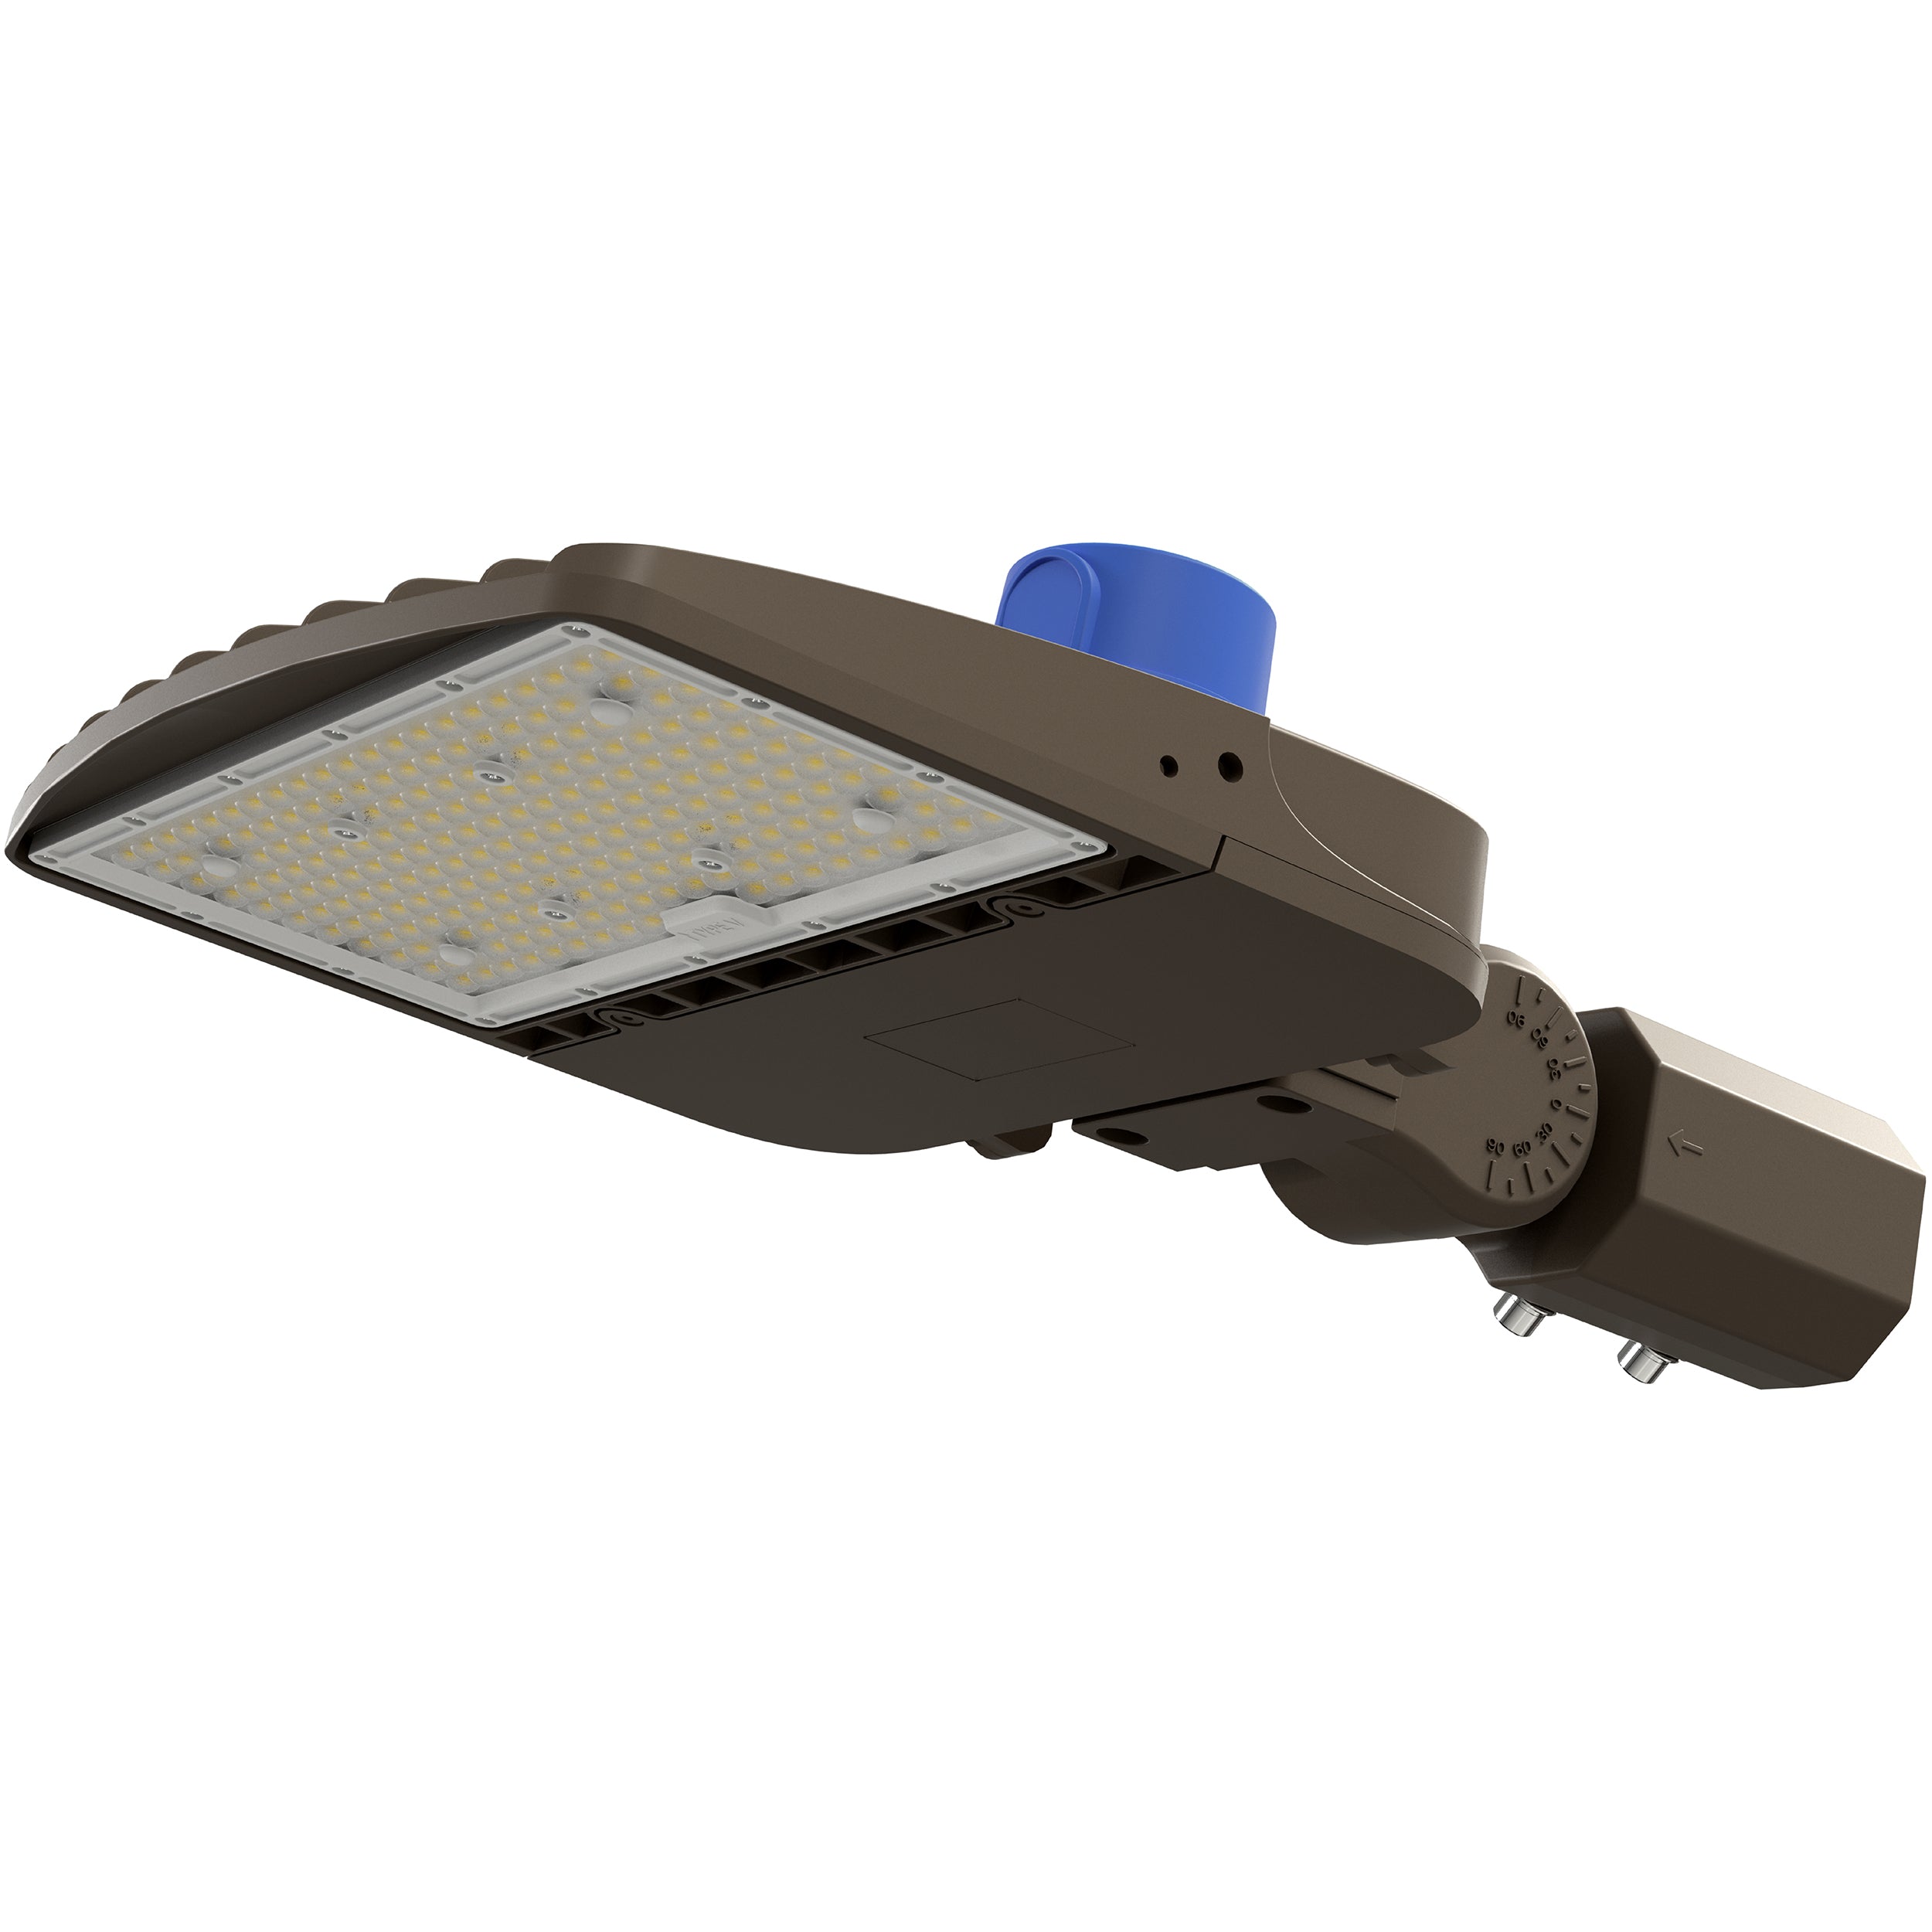 Sunco Lighting Shoebox LED 150W Parking Lot Light Fixture with Dusk to Dawn Photocell Sensor 19500 Lumens